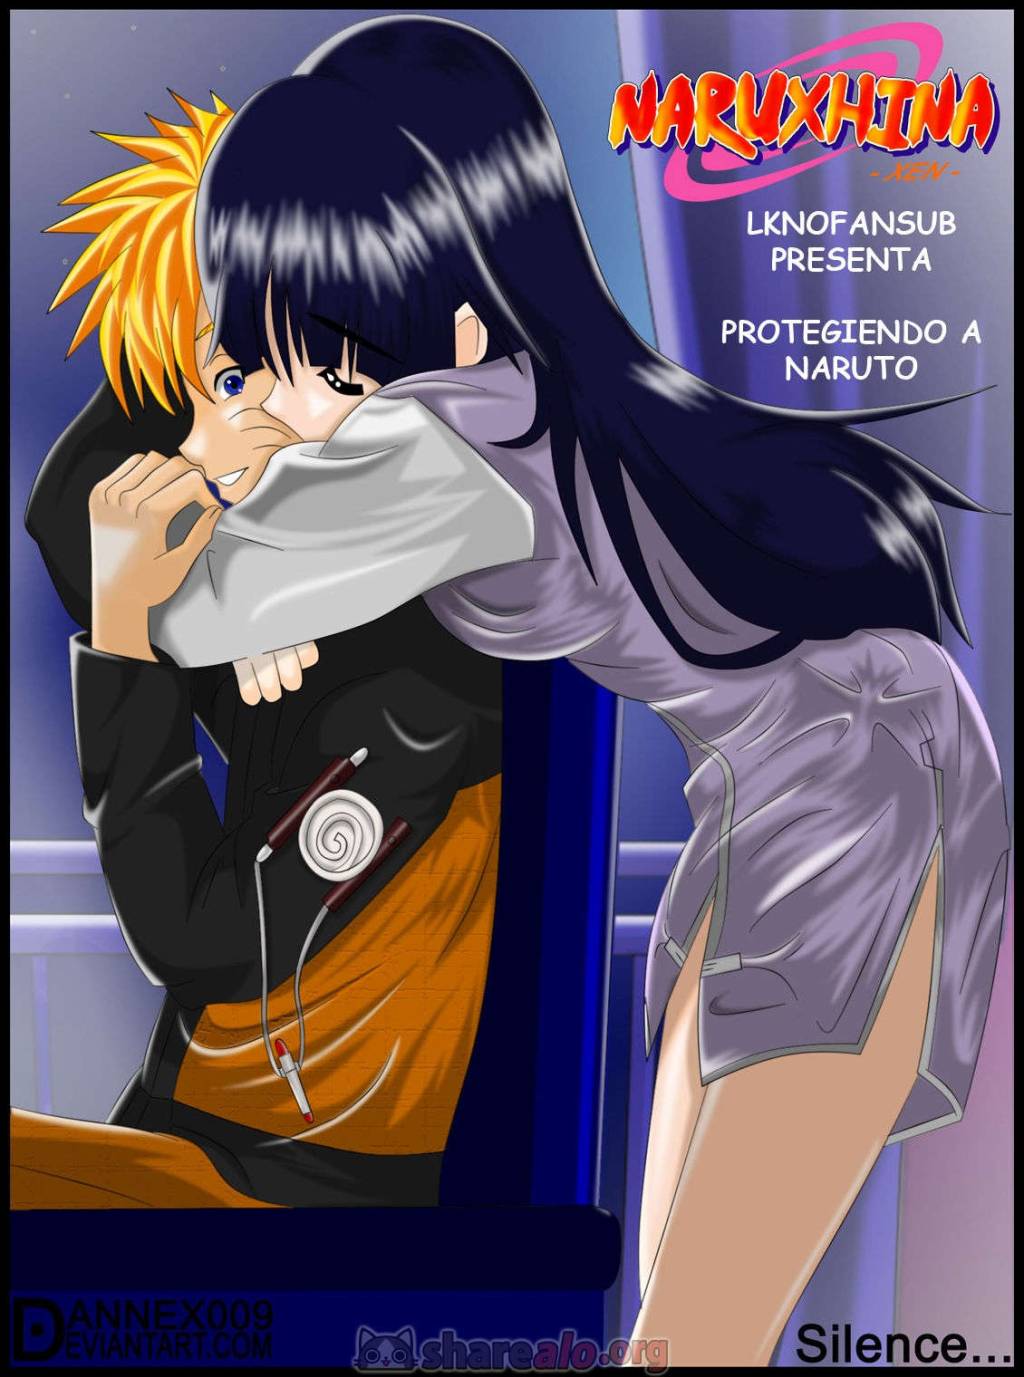 Protegiendo a Naruto - 1 - Comics Porno - Hentai Manga - Cartoon XXX